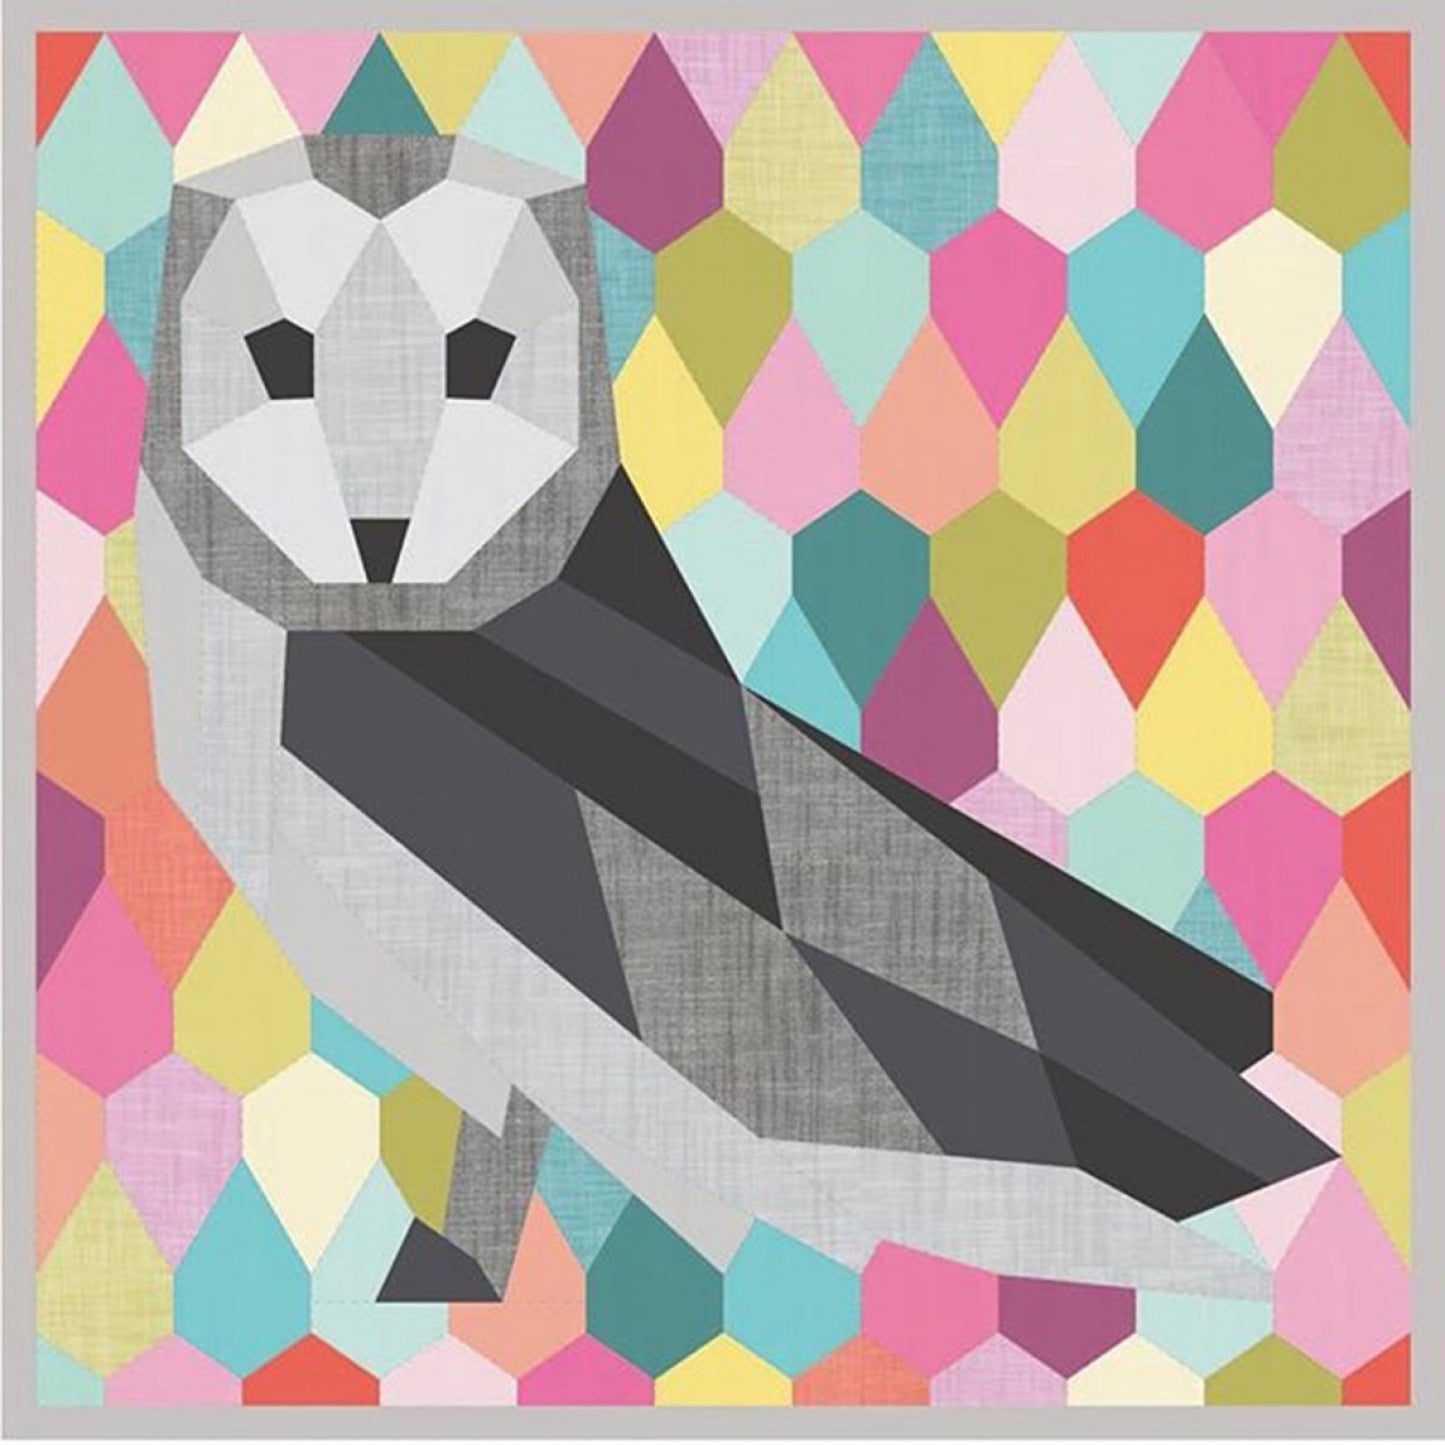 Barn Owl | Violet Craft